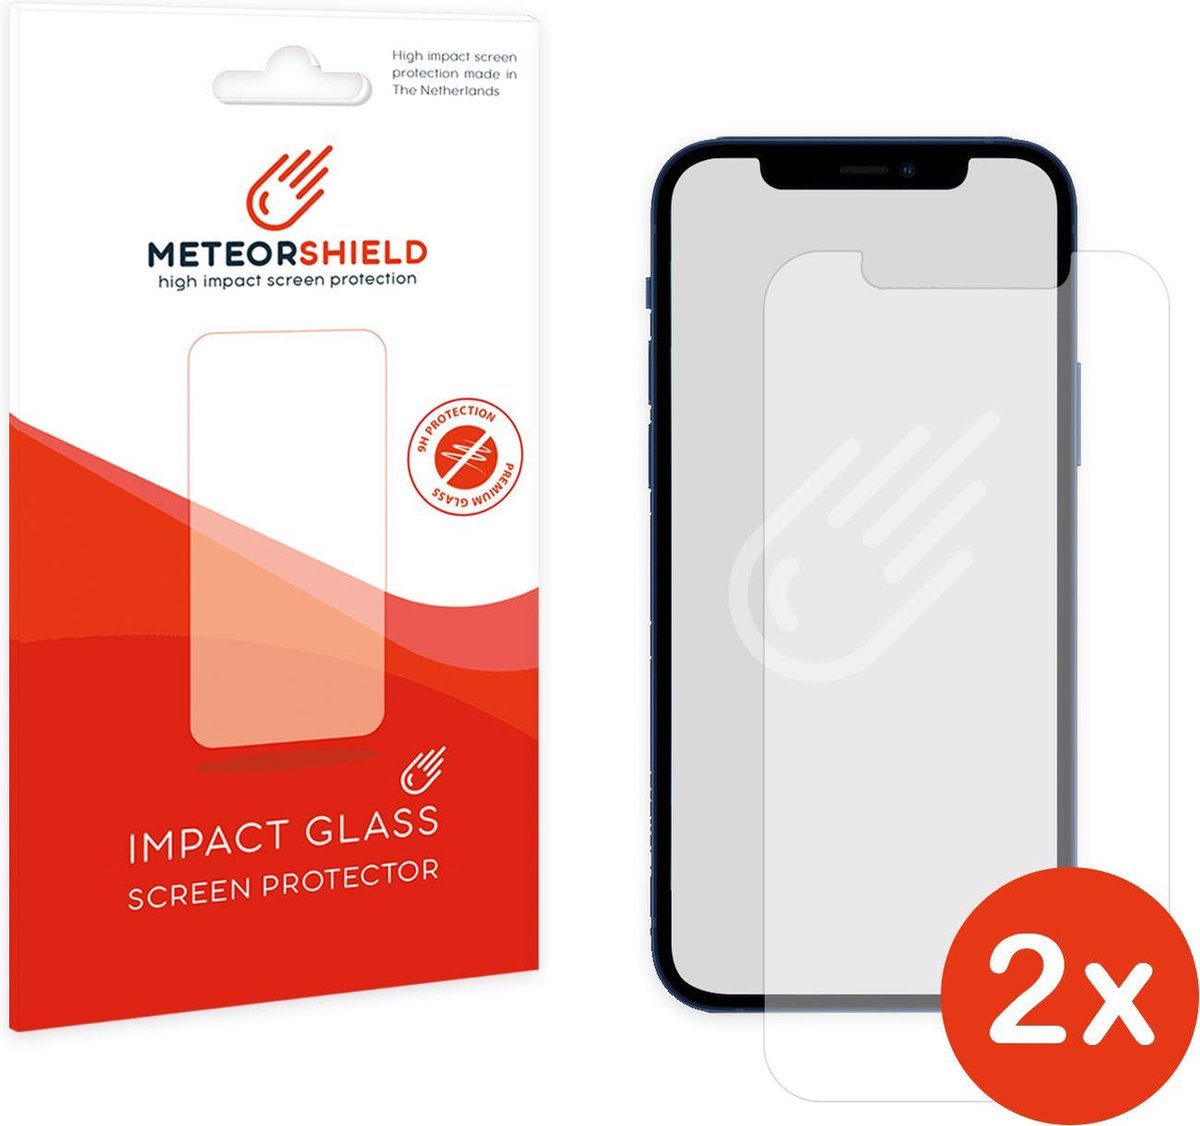 2 stuks: Meteorshield iPhone 12 Pro Max screenprotector - Ultra clear impact glass